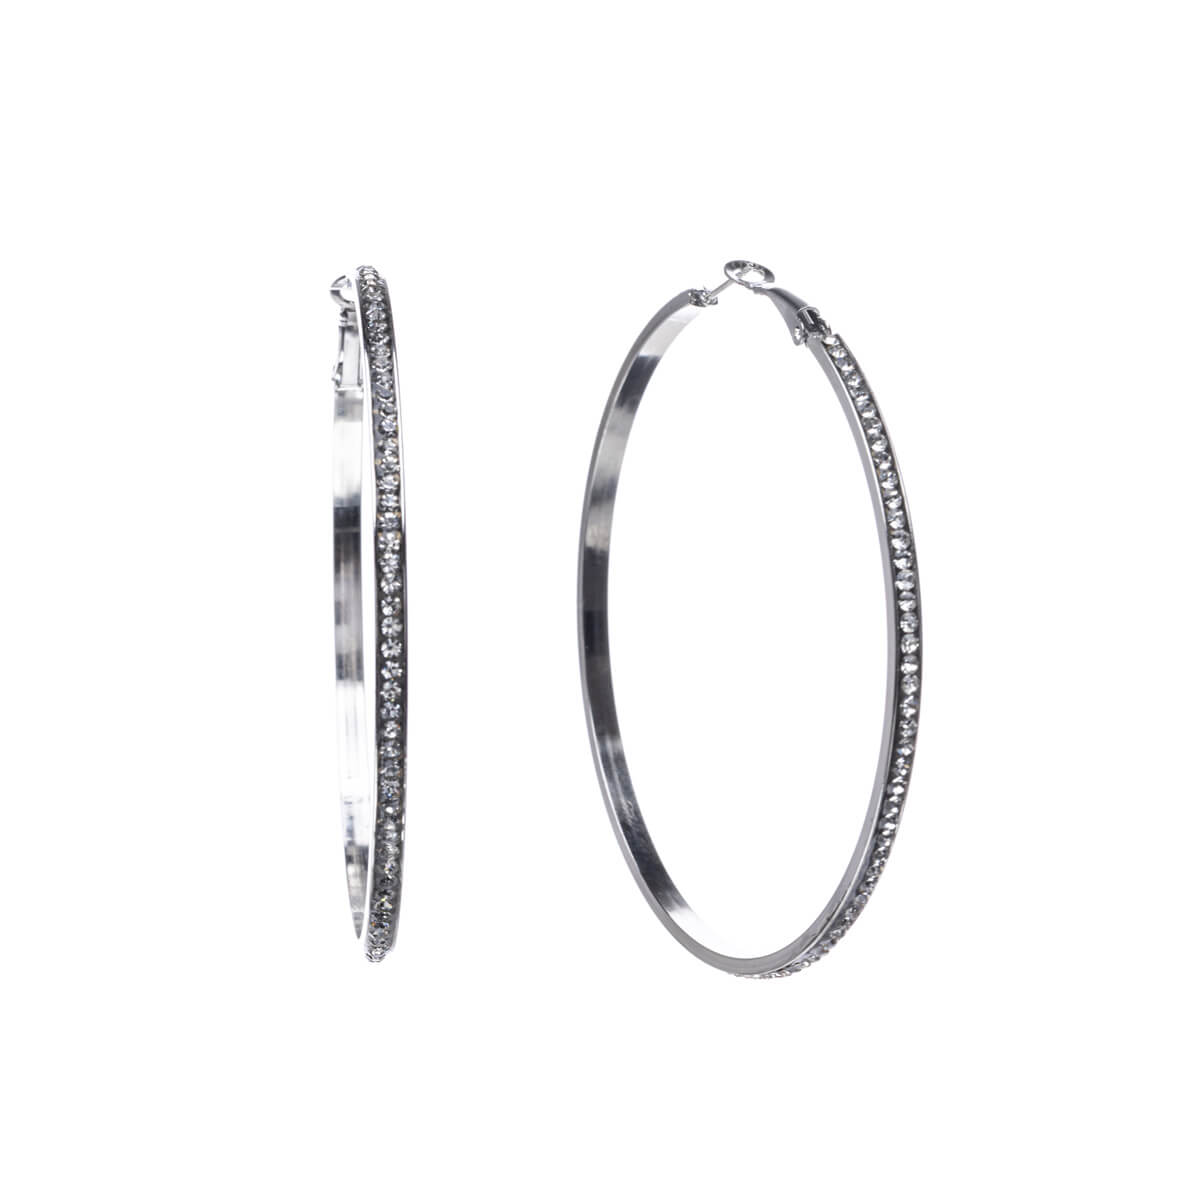 Rhinestone earrings ring earrings 7cm (steel 316L)